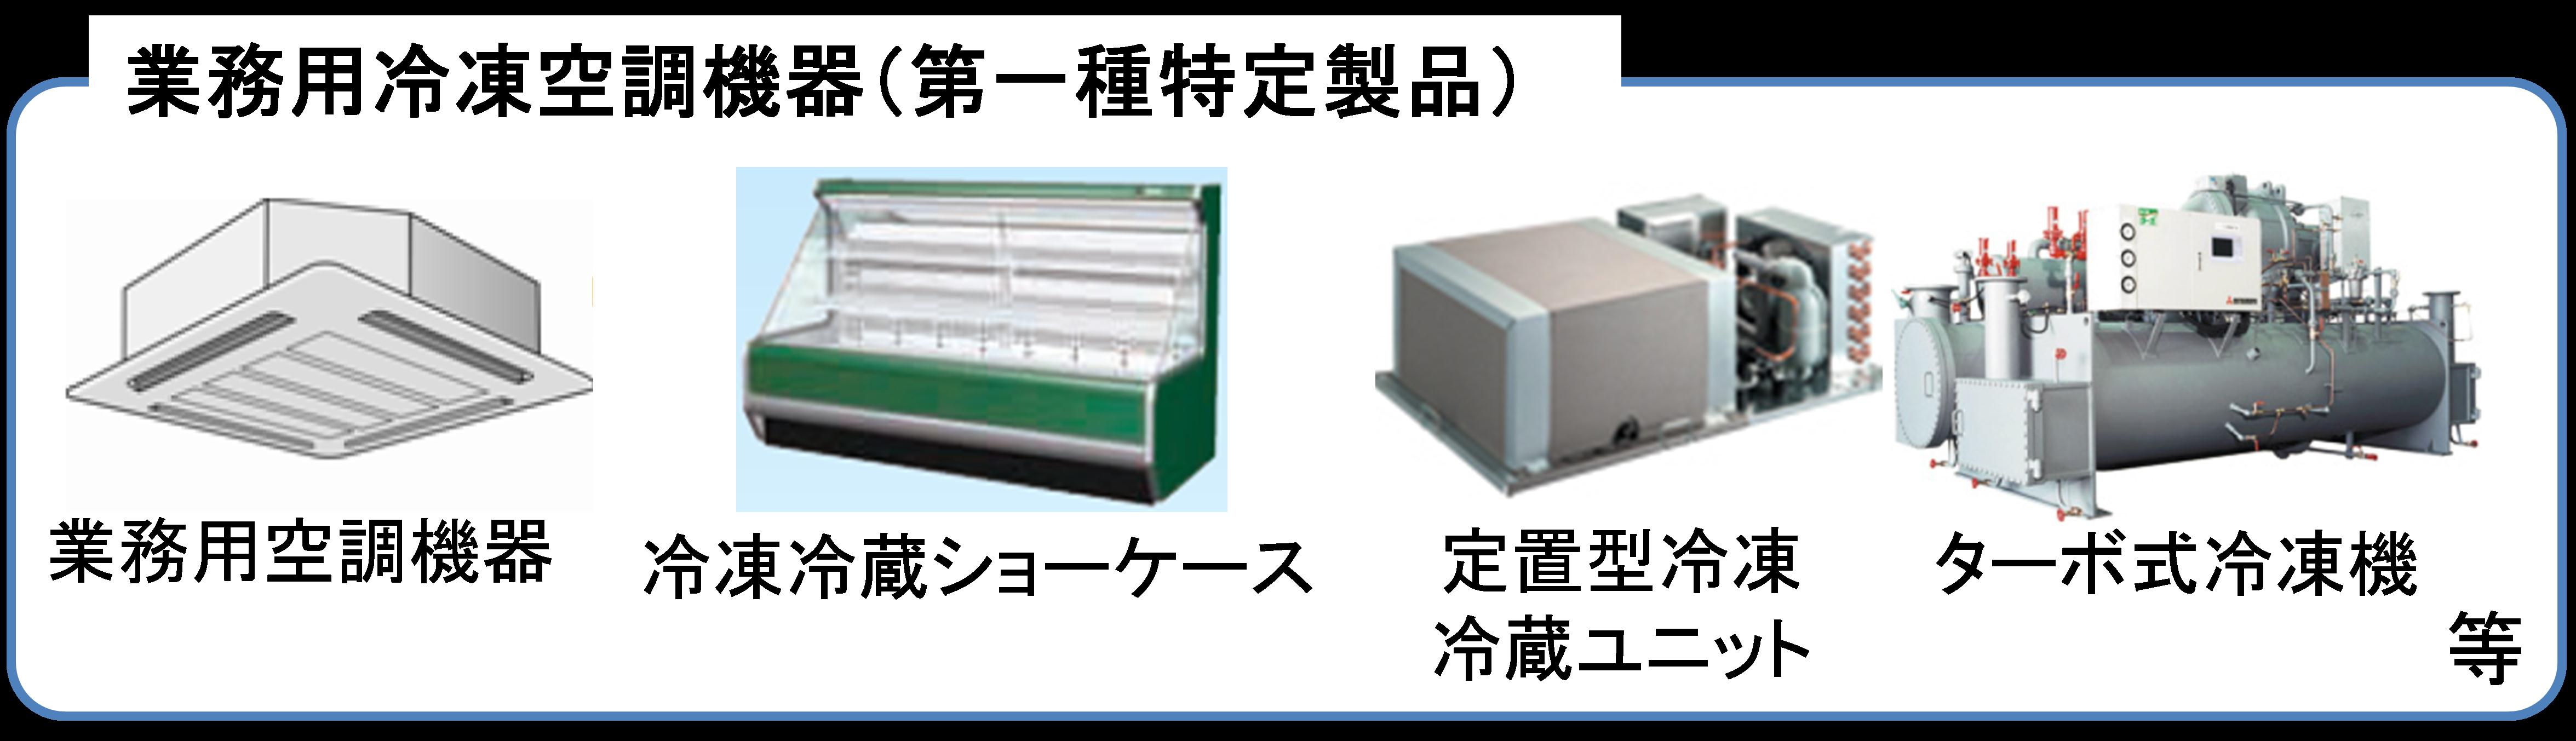 業務用冷凍空調機器（第一種特定製品）：業務用空調機器、冷凍冷蔵ショーケース、定置型冷凍冷蔵ユニット、ターボ式冷凍機、等